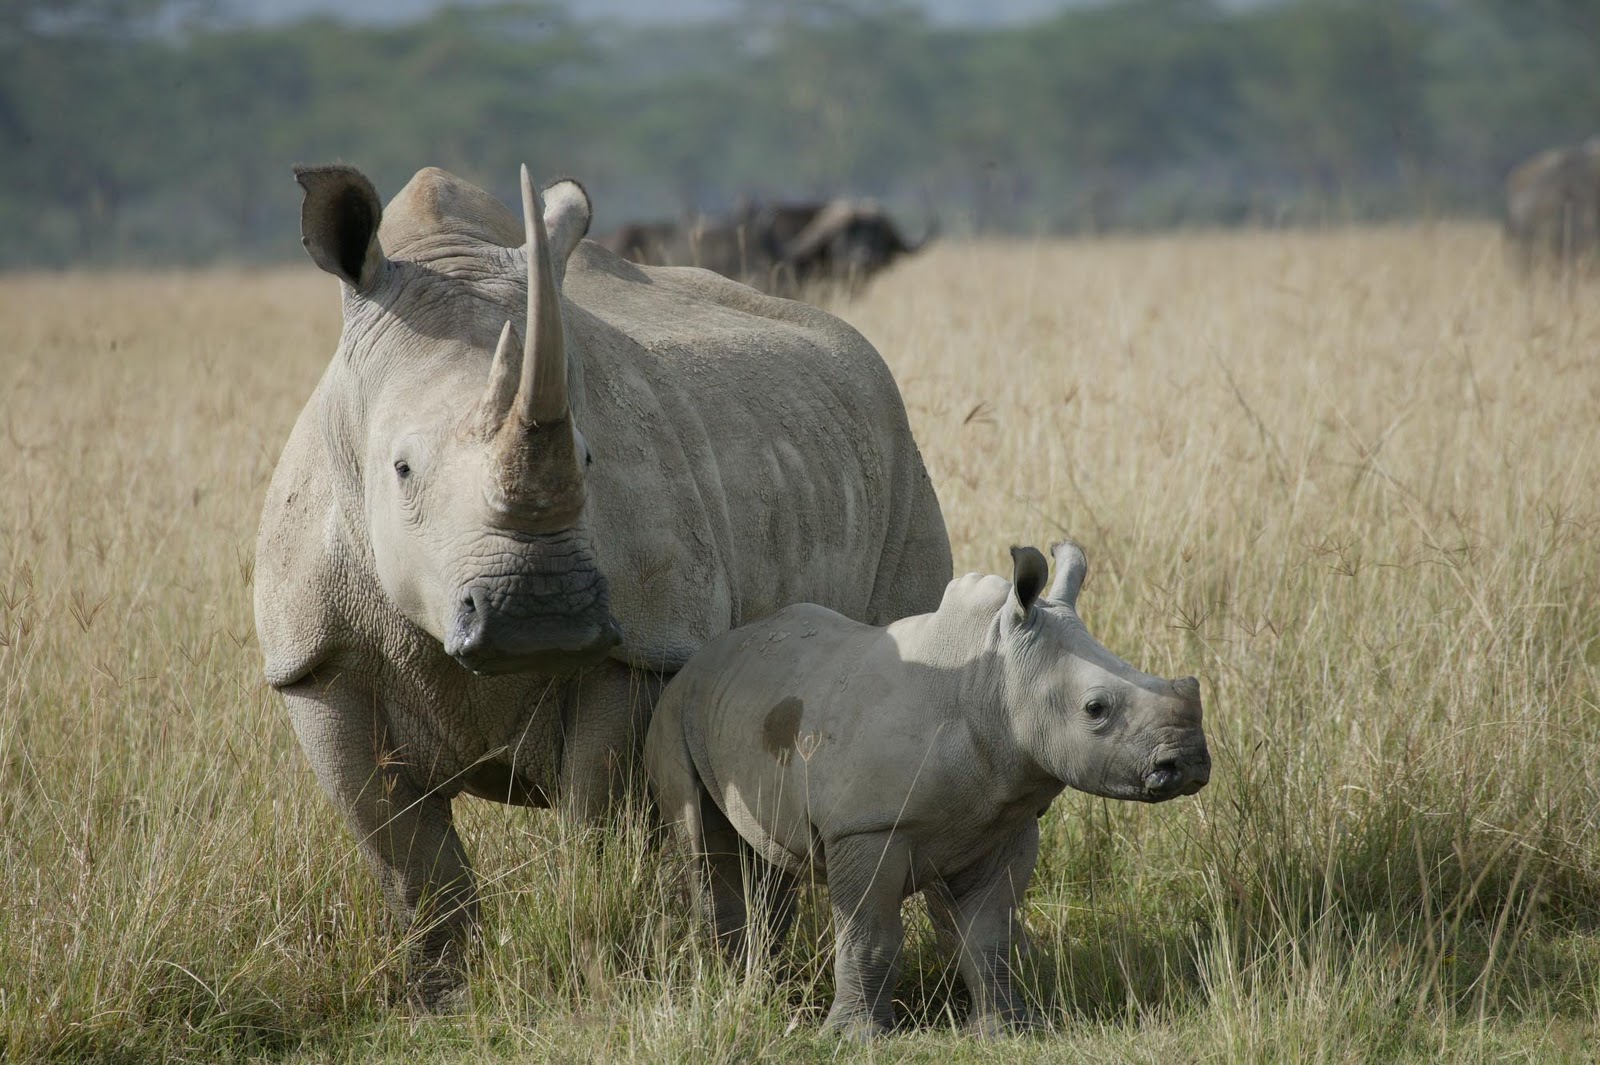 http://1.bp.blogspot.com/-pDtiYh6-crY/TvTdFvBvKqI/AAAAAAAACcM/4o-rbzhYBAI/s1600/White+Rhino+beautiful+dangerous+african+animal+safaris+animal+attacks+news+picture.jpg